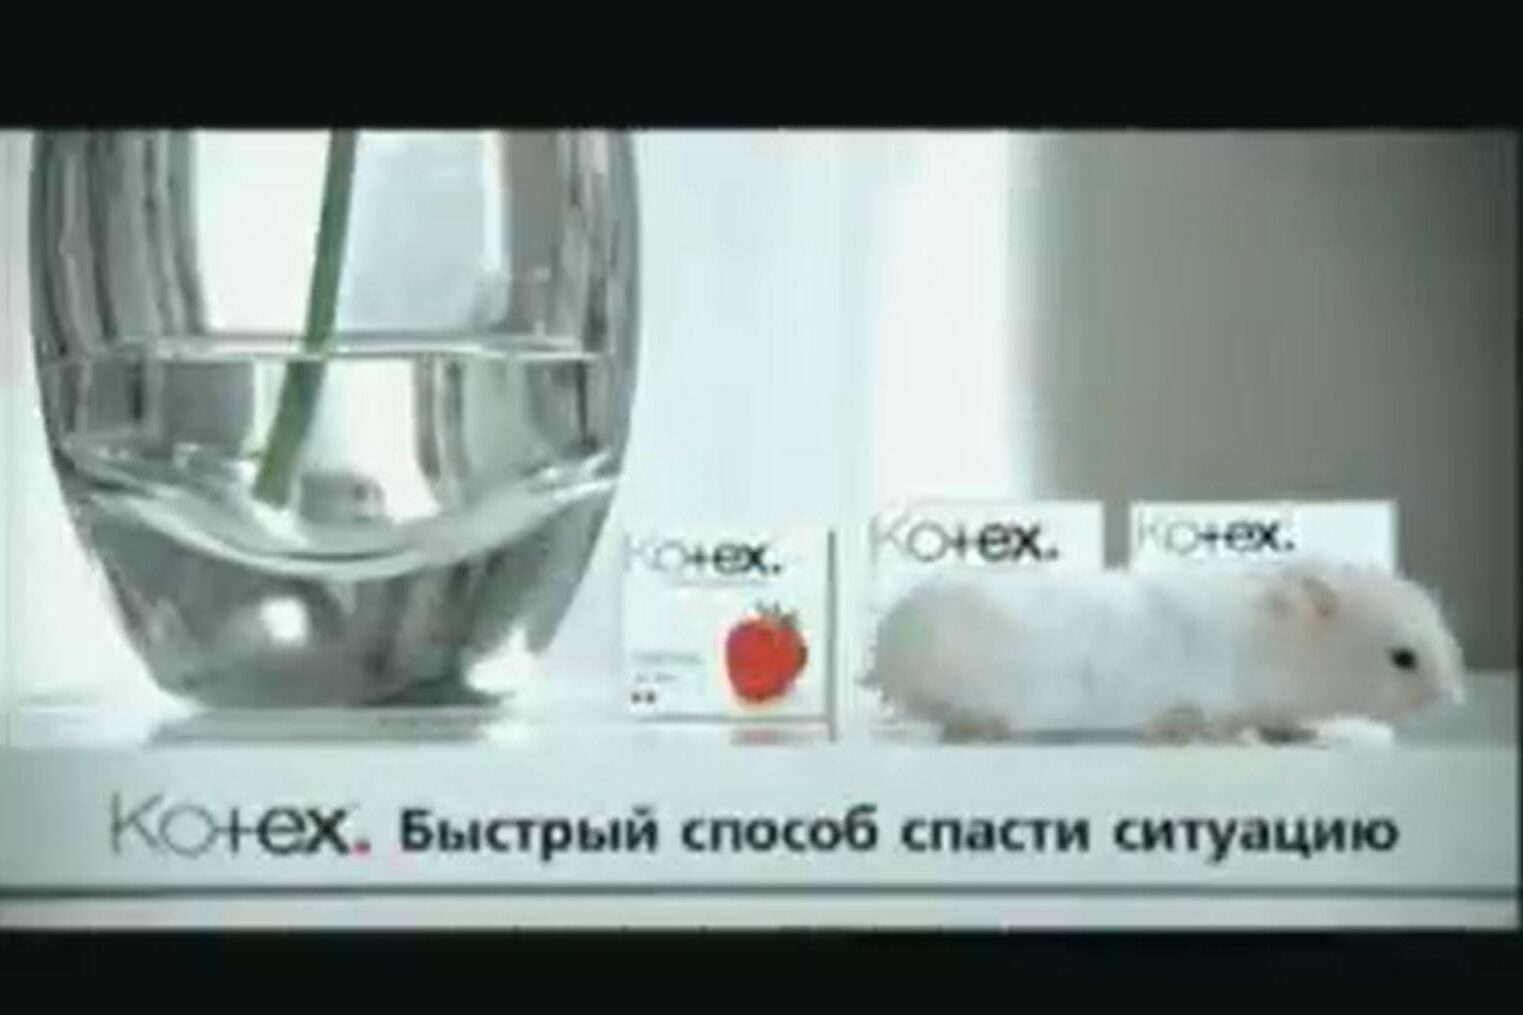 Kotex電視廣告 ╴拯救小老鼠篇